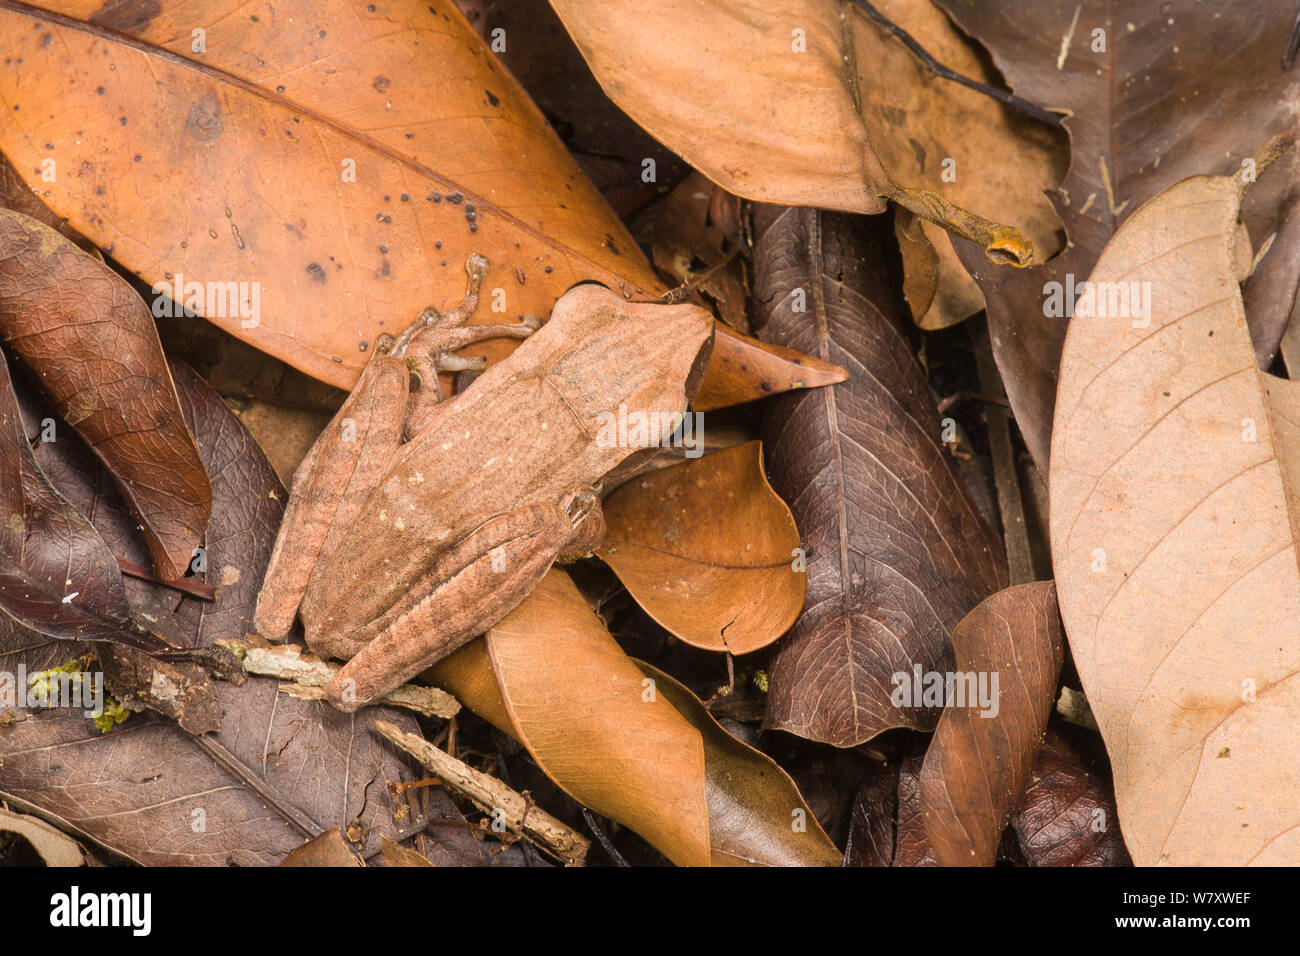 Four-lined treefrog (Polypedates leucomystax) Bako National Park Sarawak, Borneo. Stock Photo